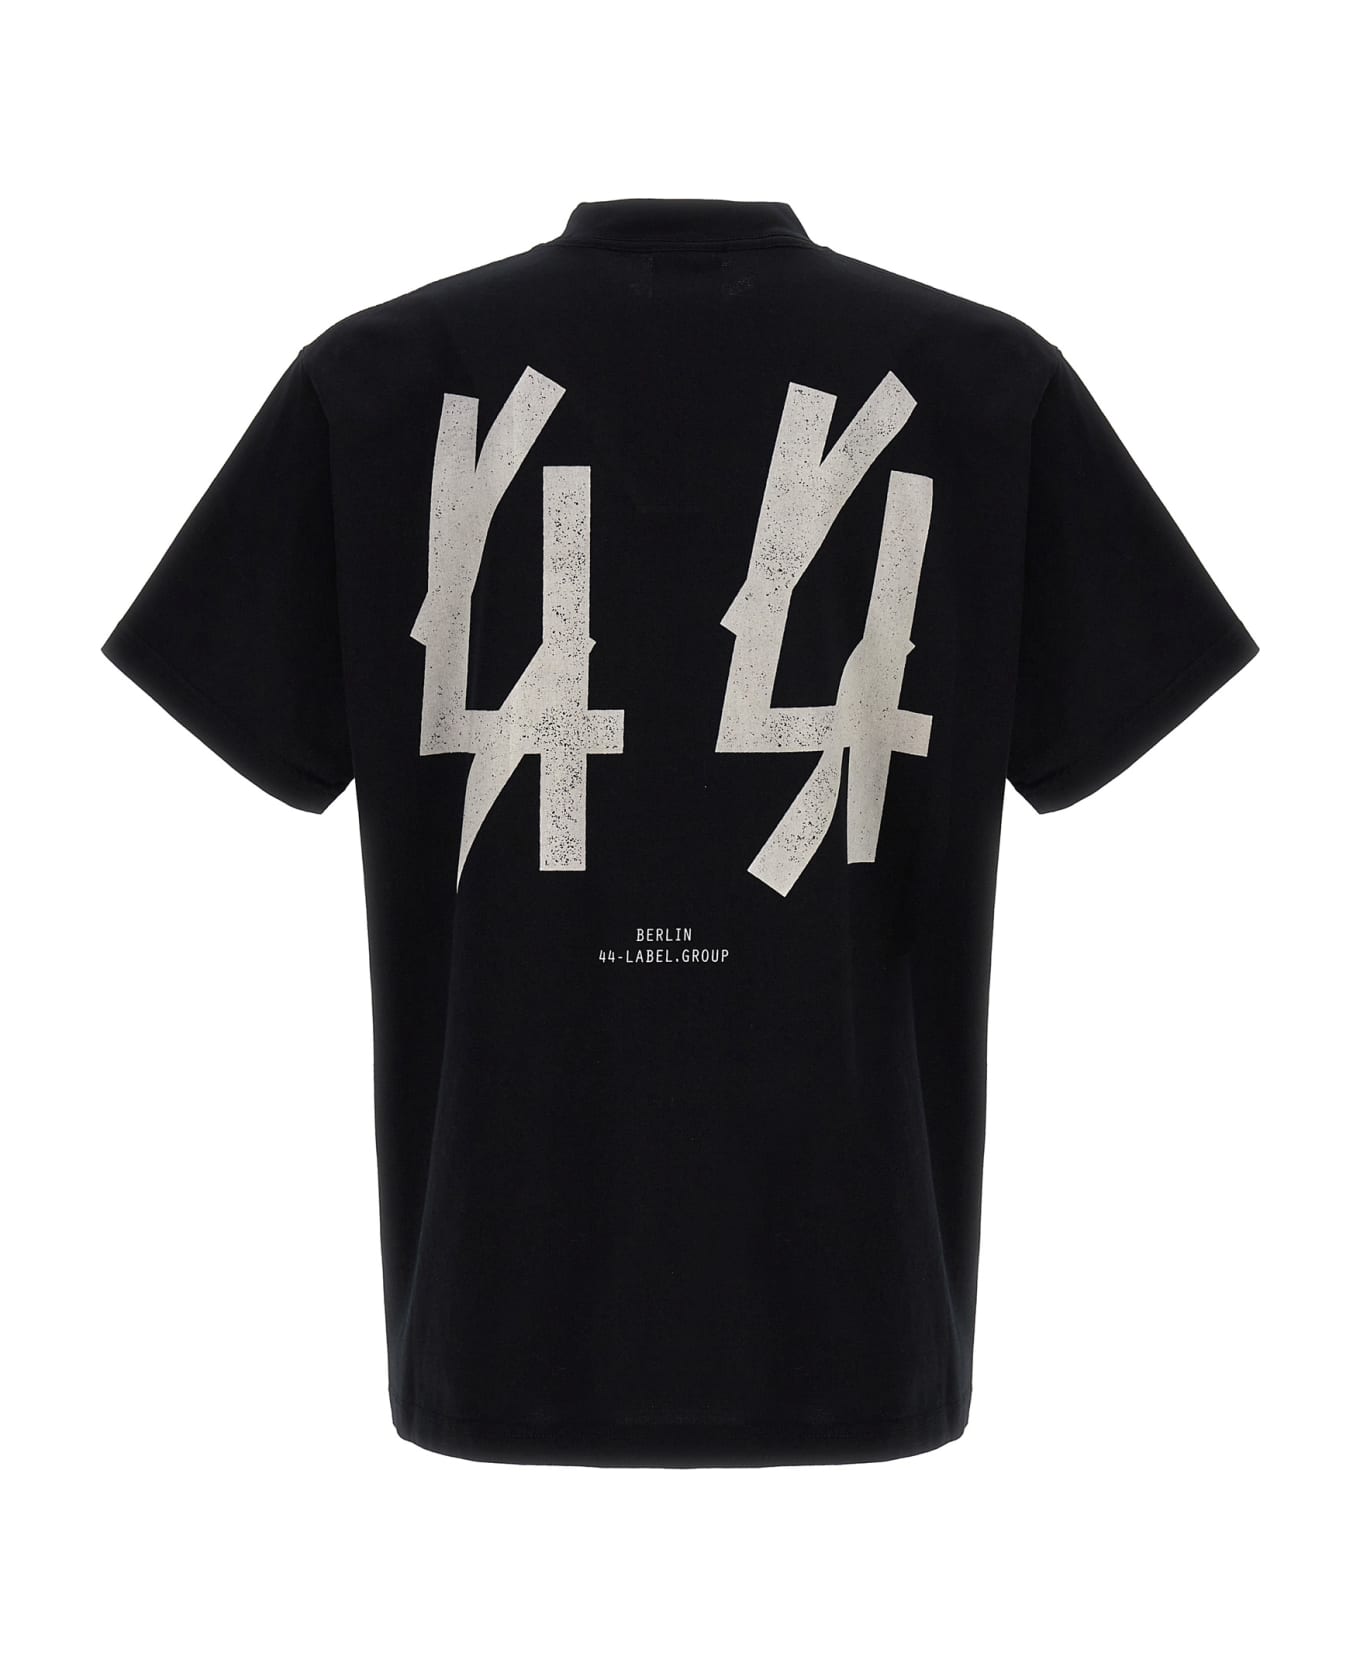 44 Label Group T-shirt Guestlist/berlin Sub' - White/Black